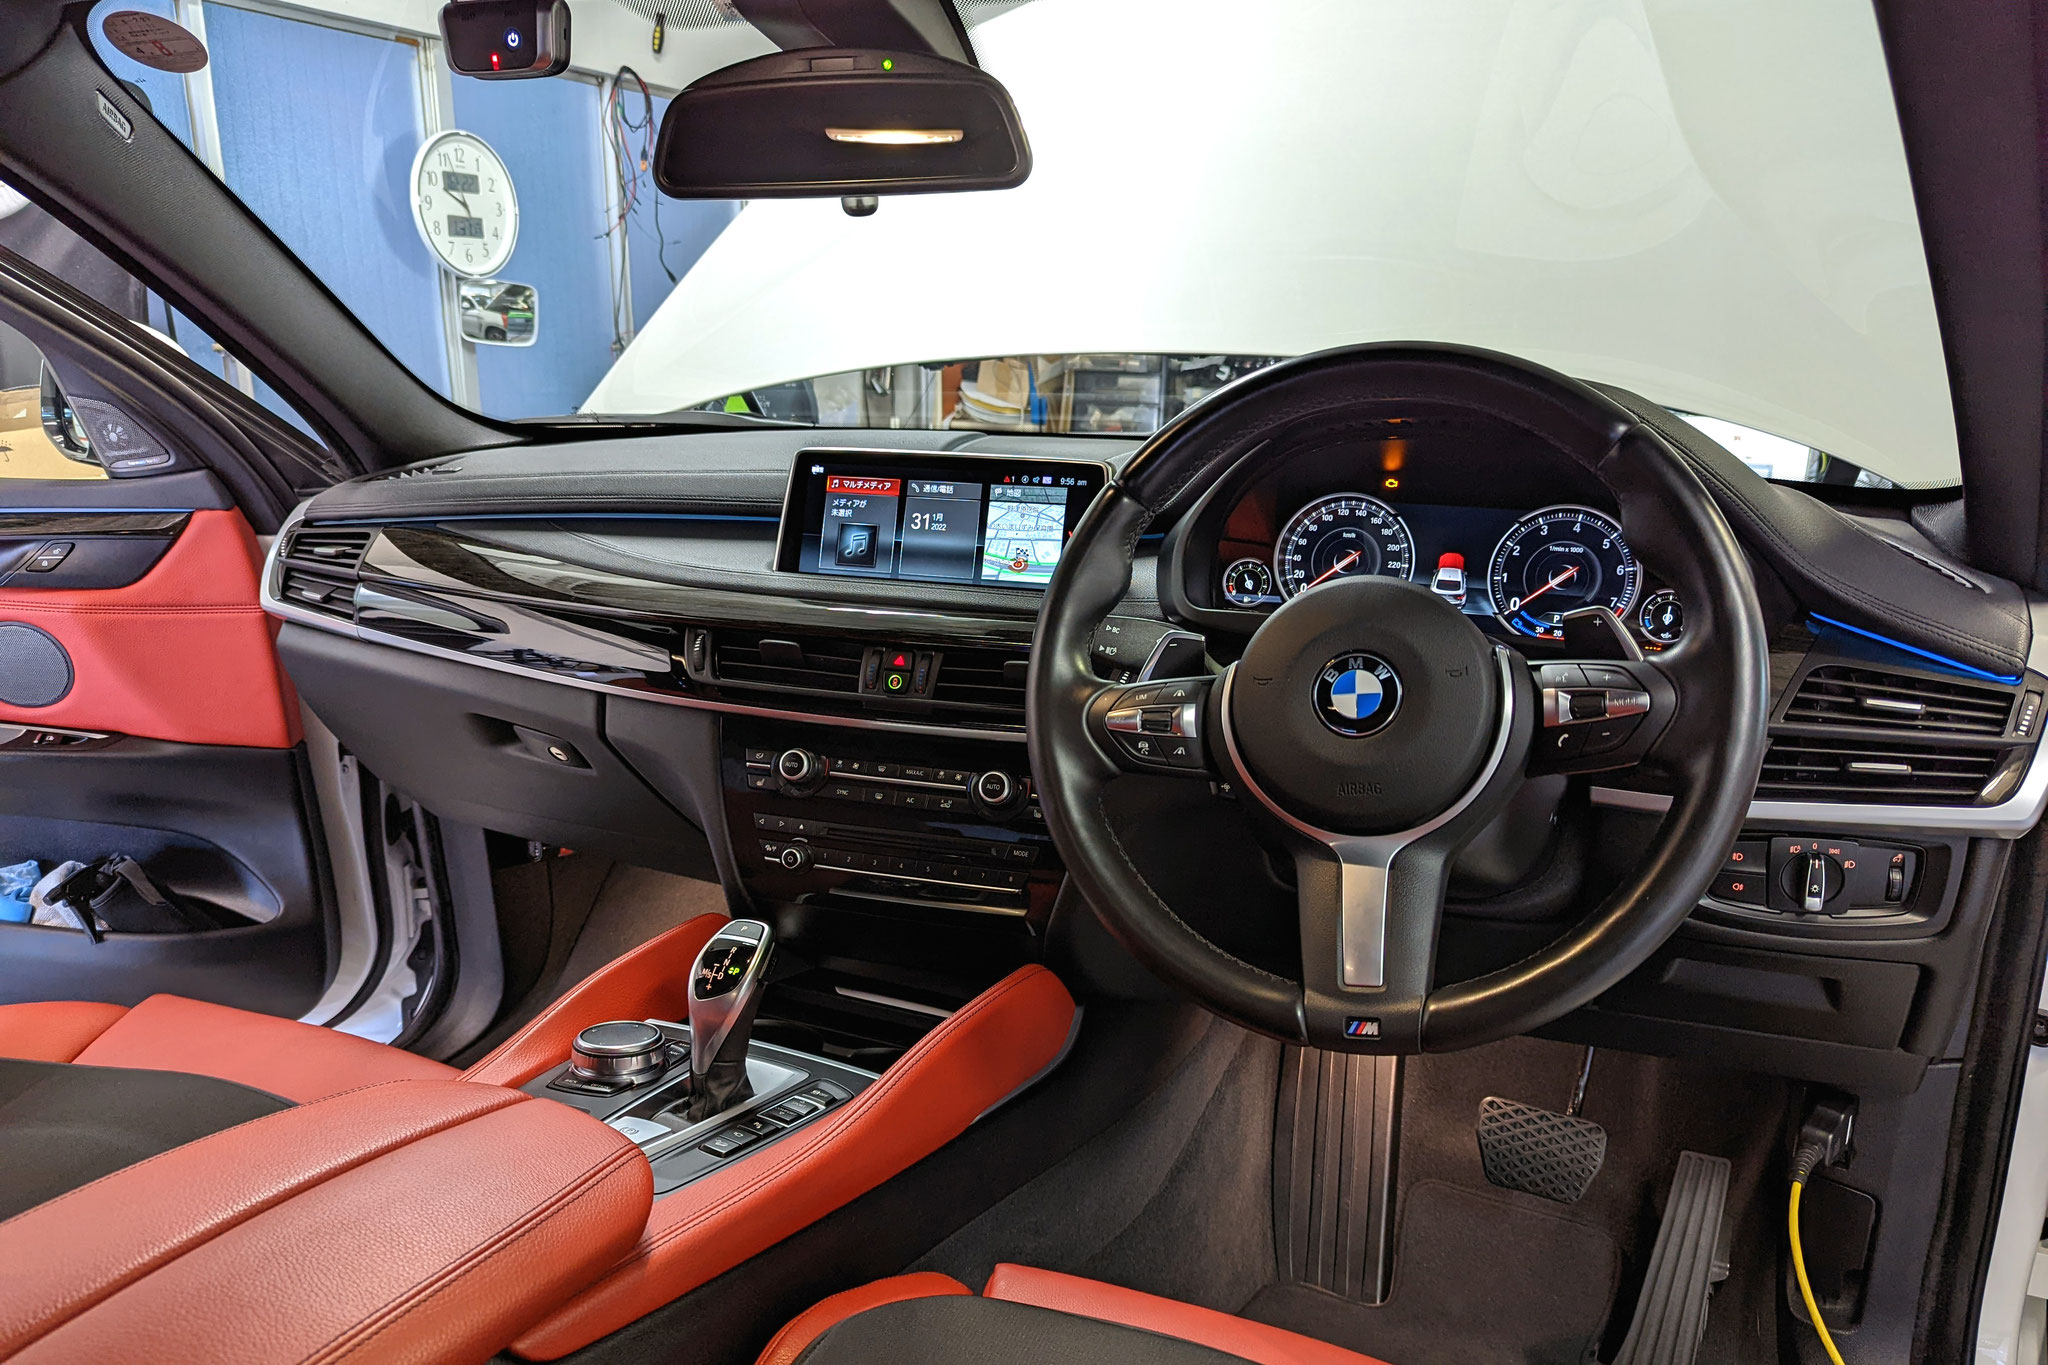 BMW F X6 i 完全ハンズオフ渋滞アシスト後付け+コーディング   BMW